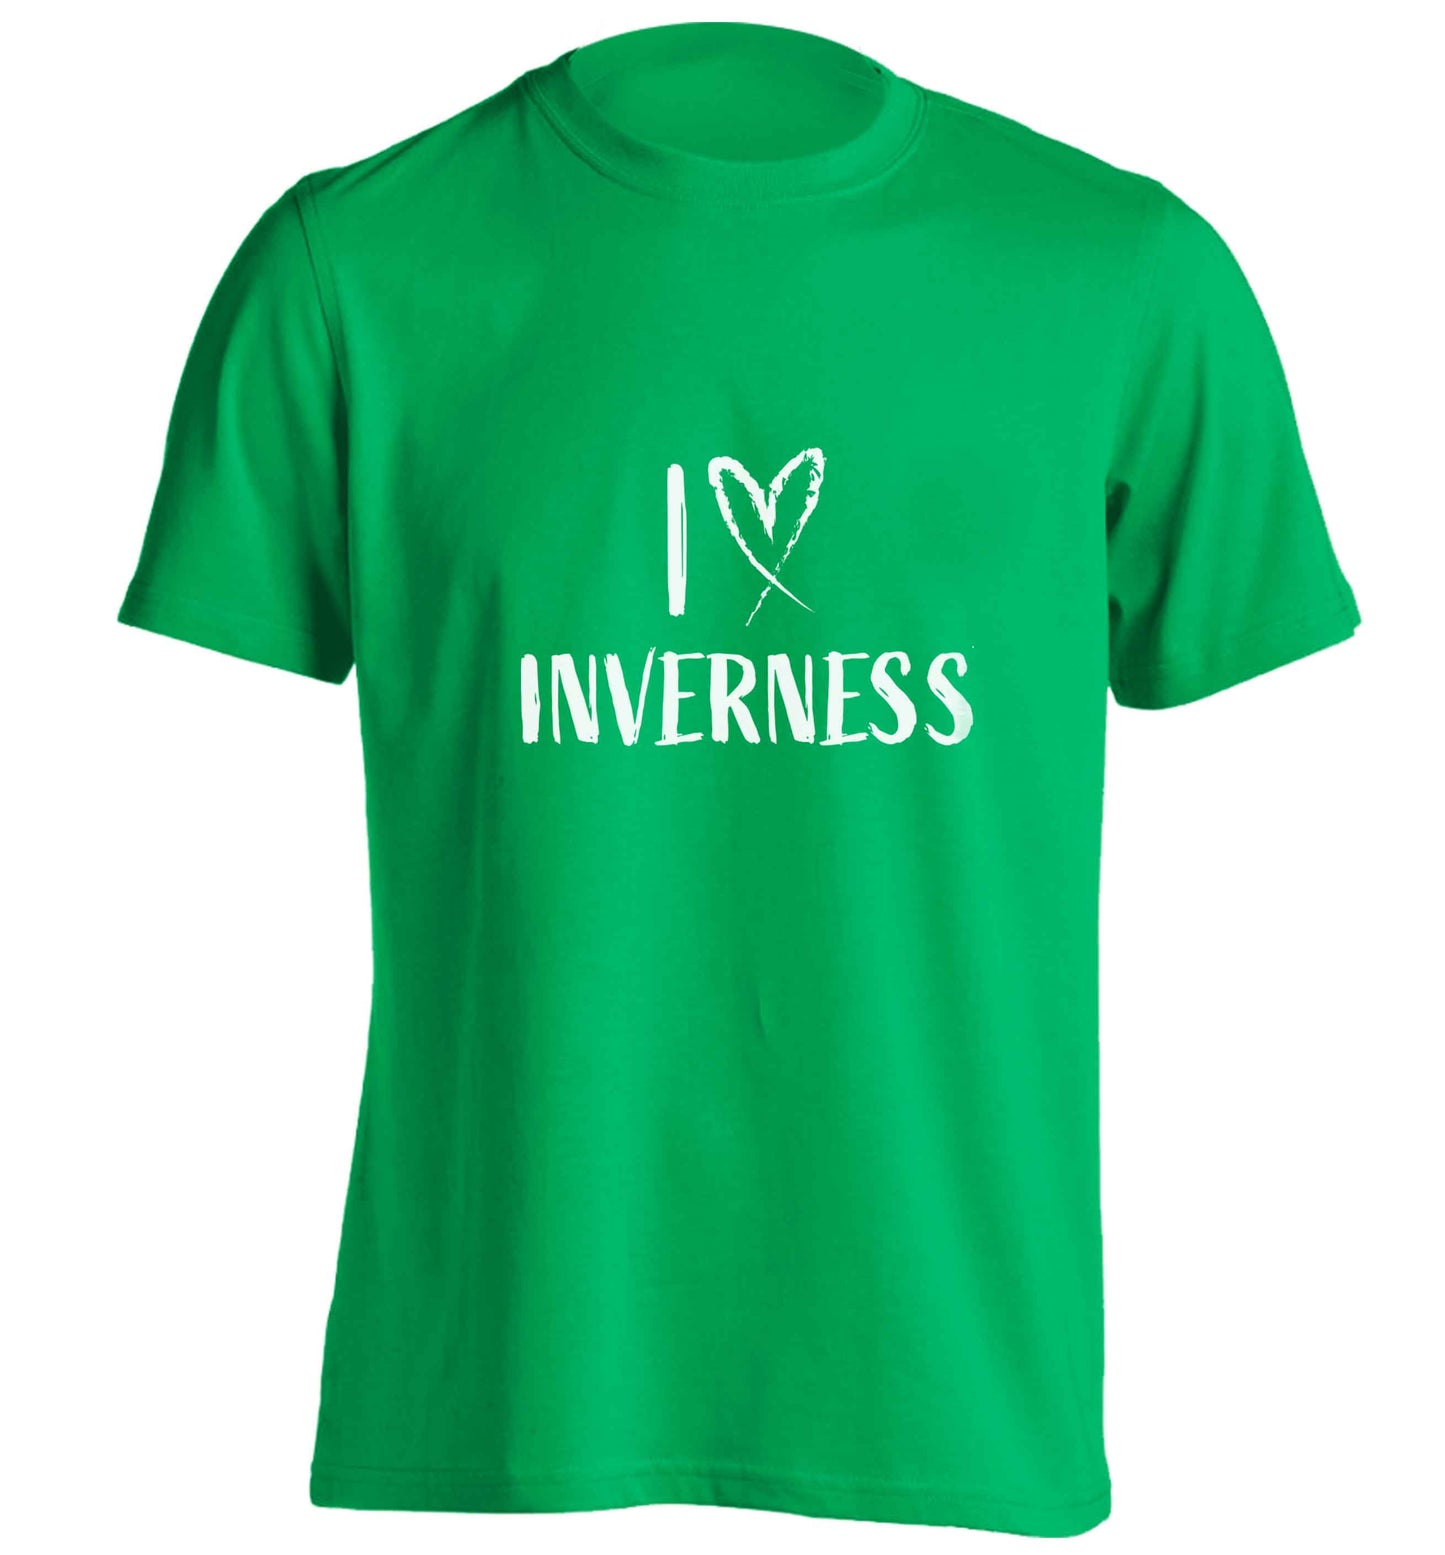 I love Inverness adults unisex green Tshirt 2XL